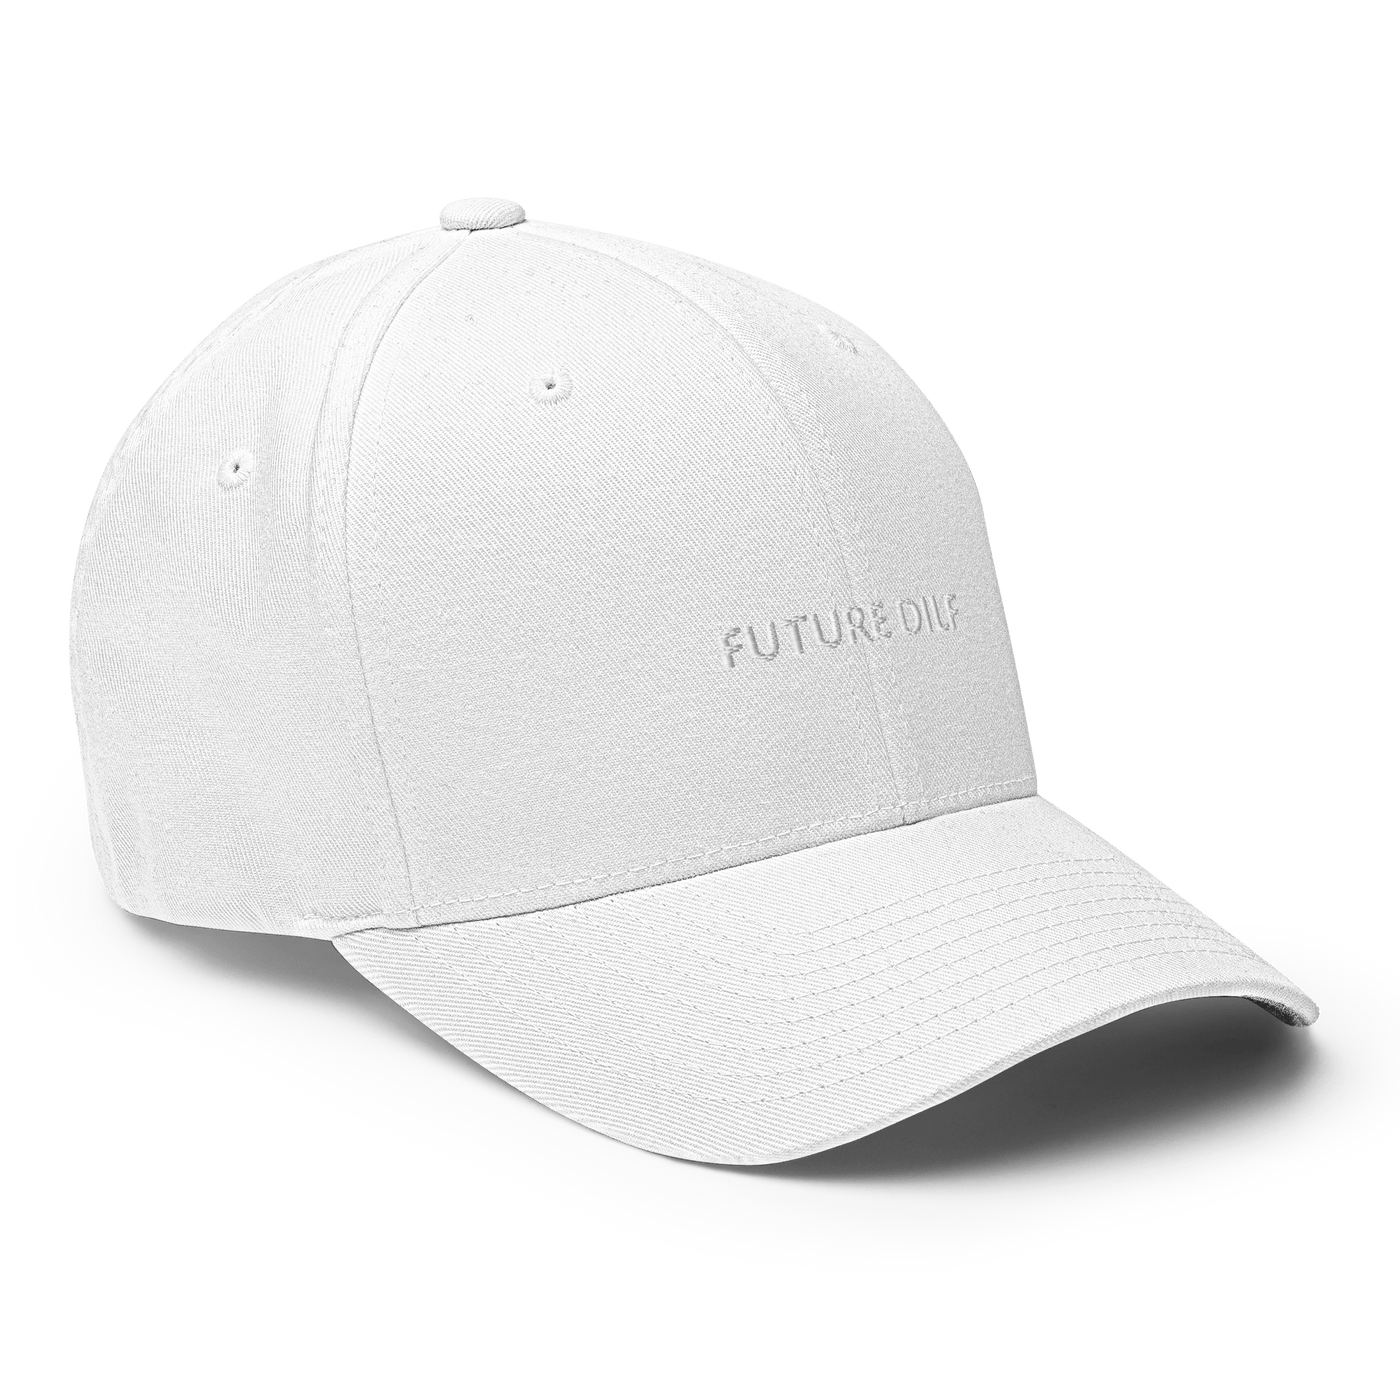 Future Dilf Flexfit Cap - White - S/M - Just Another Cap Store